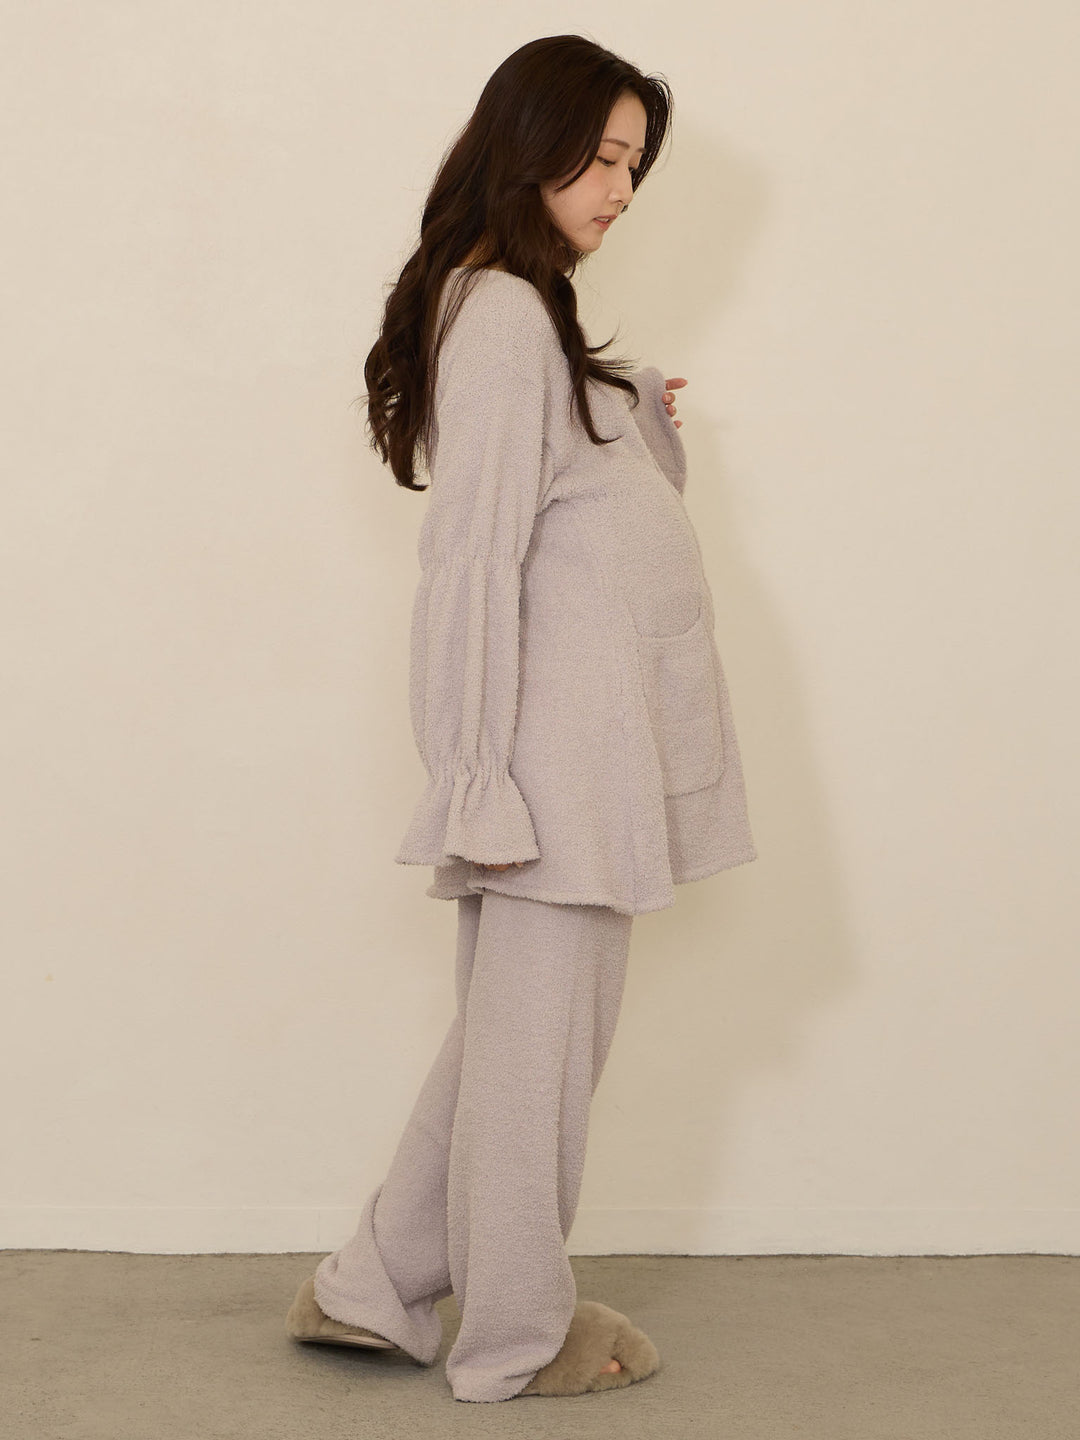 [孕妇/产后] 蓬松睡衣套装 灰色